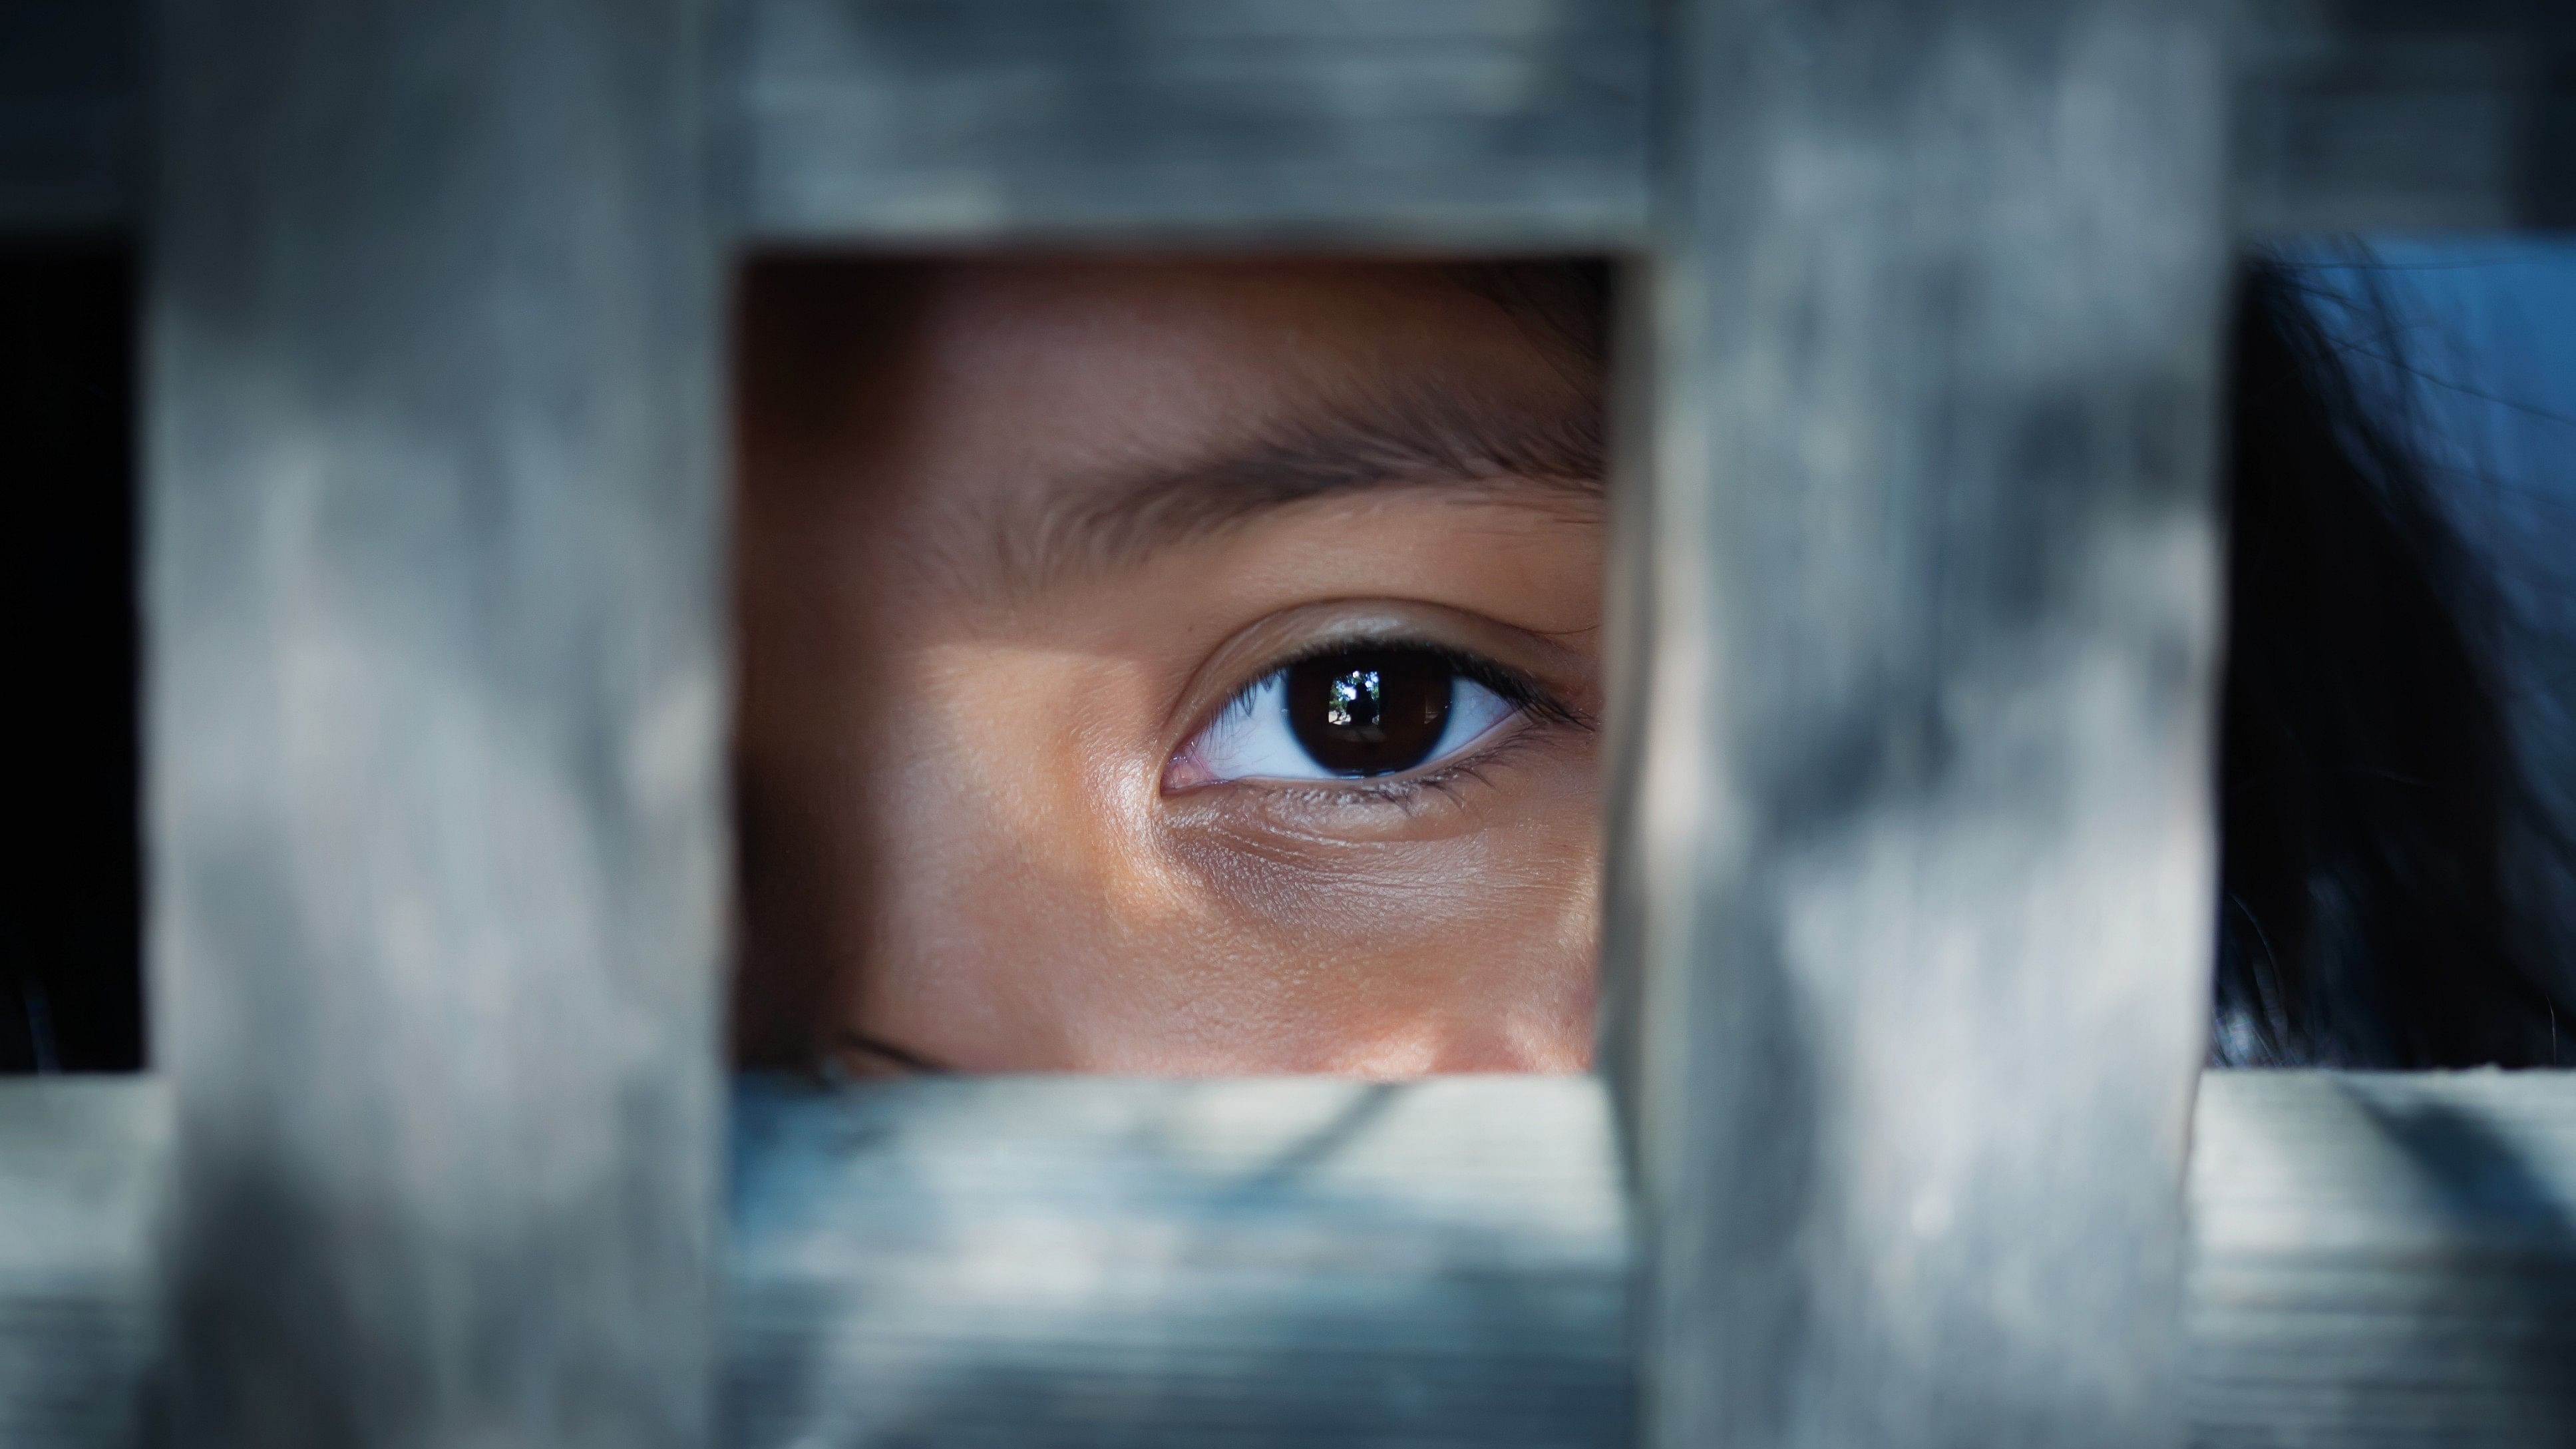 <div class="paragraphs"><p>Representative image showing a child behind bars</p></div>